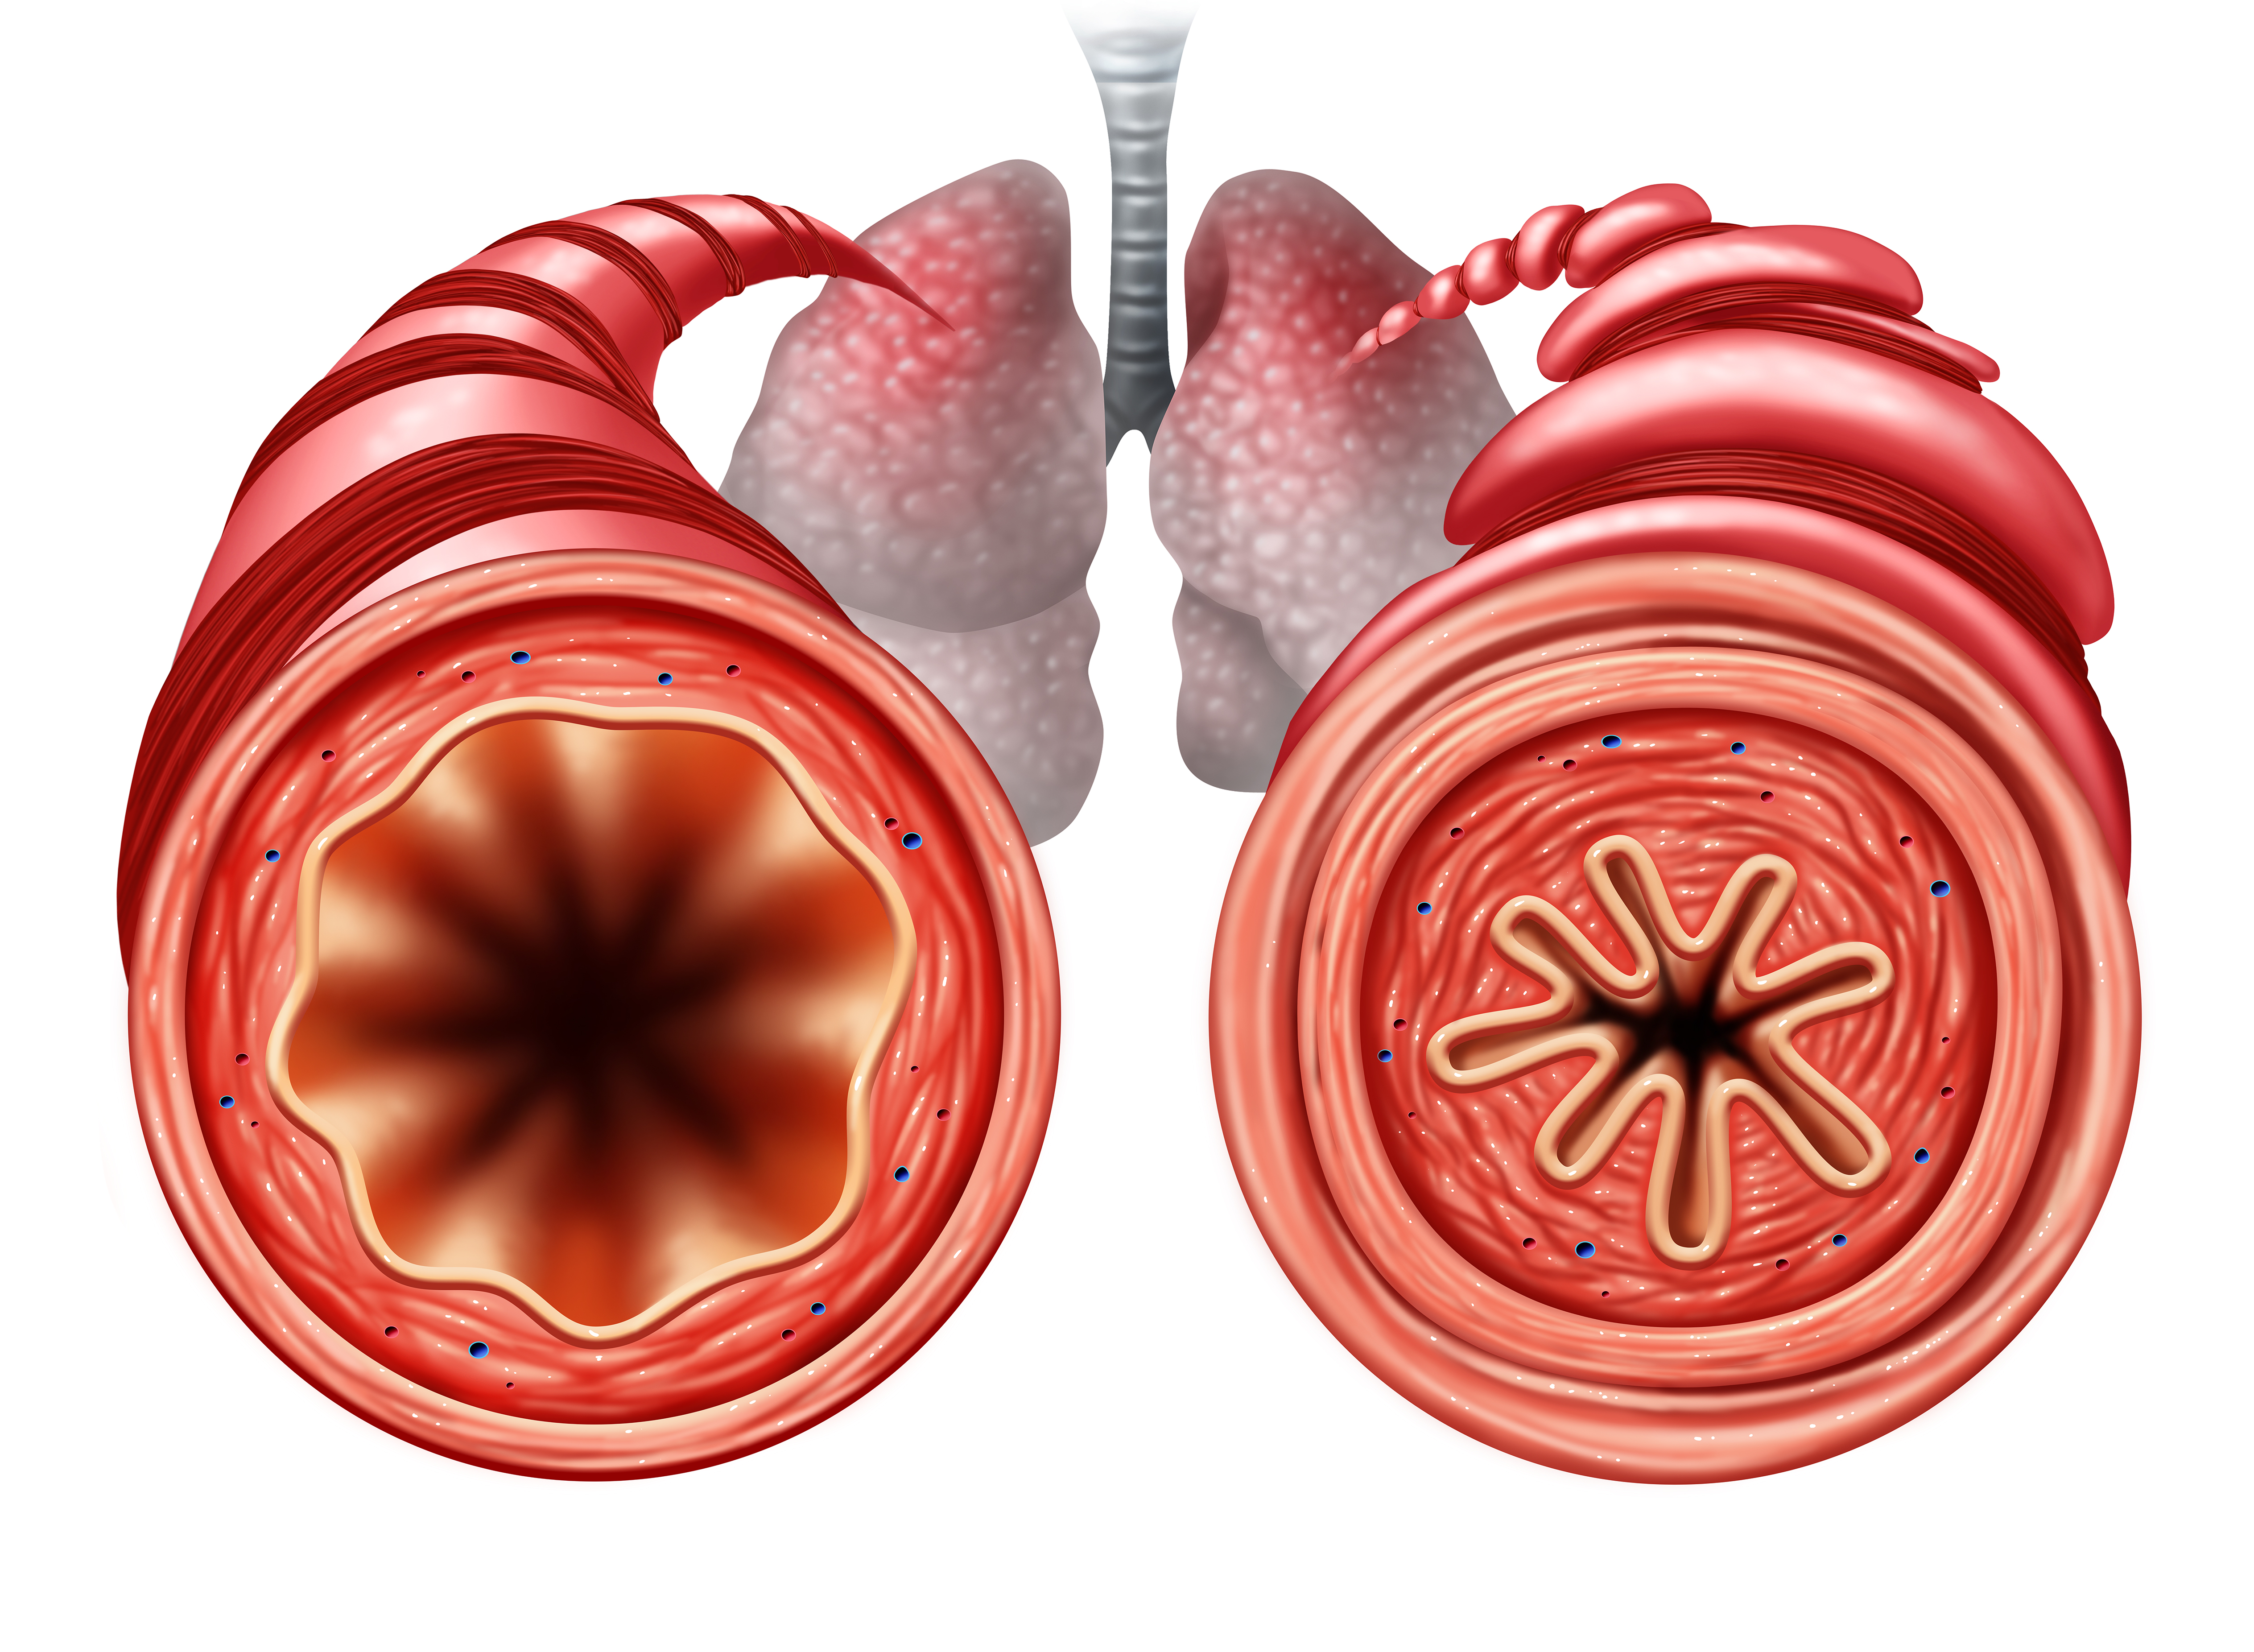 中重度未控制哮喘急性加重史对<font color="red">dupilumab</font>临床疗效的影响